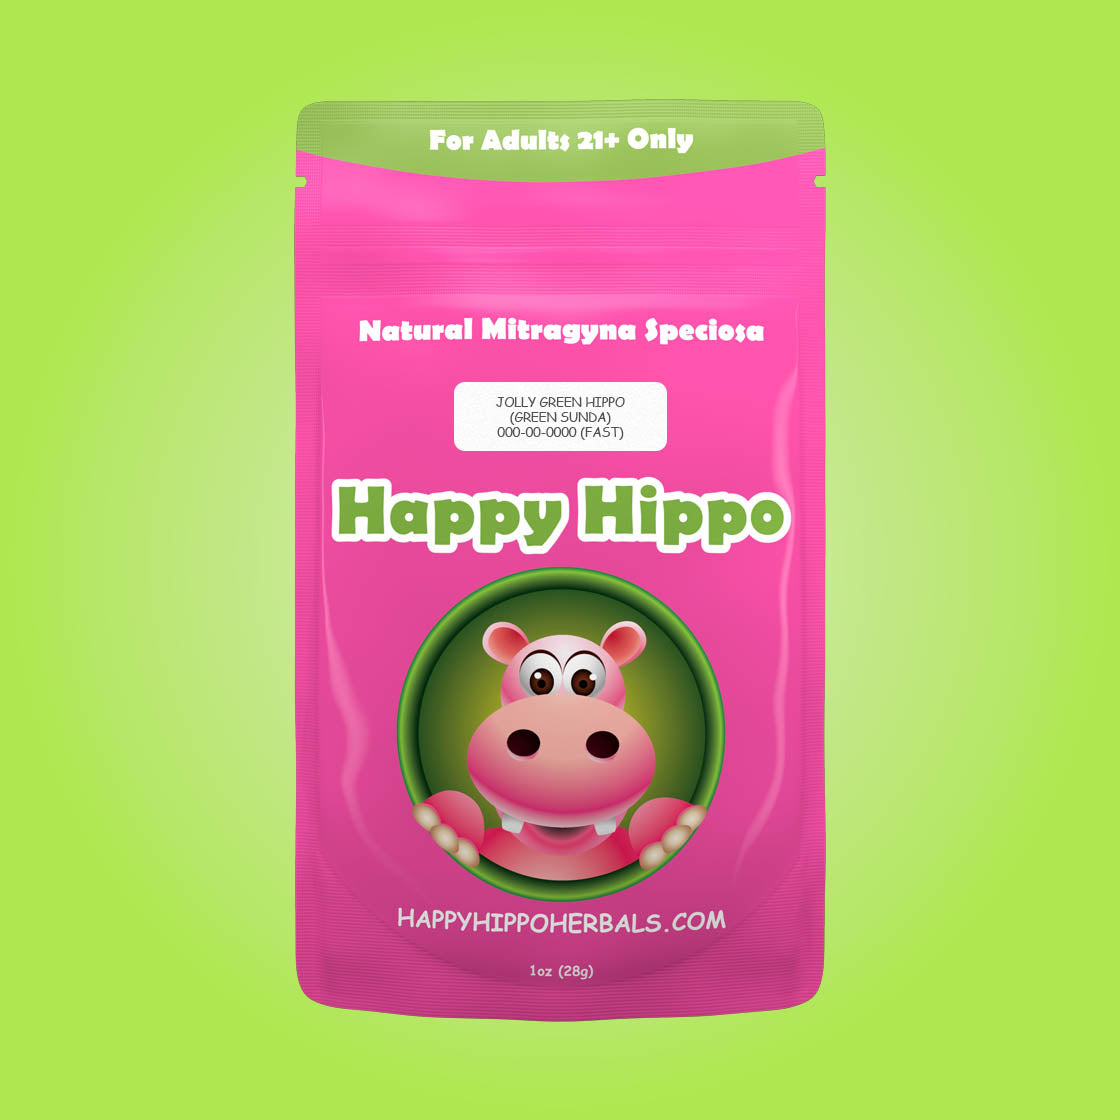 Product Image depicting a 1oz bag of Happy Hippo Green Vein Sunda Kratom Powder (Mitragyna Speciosa).